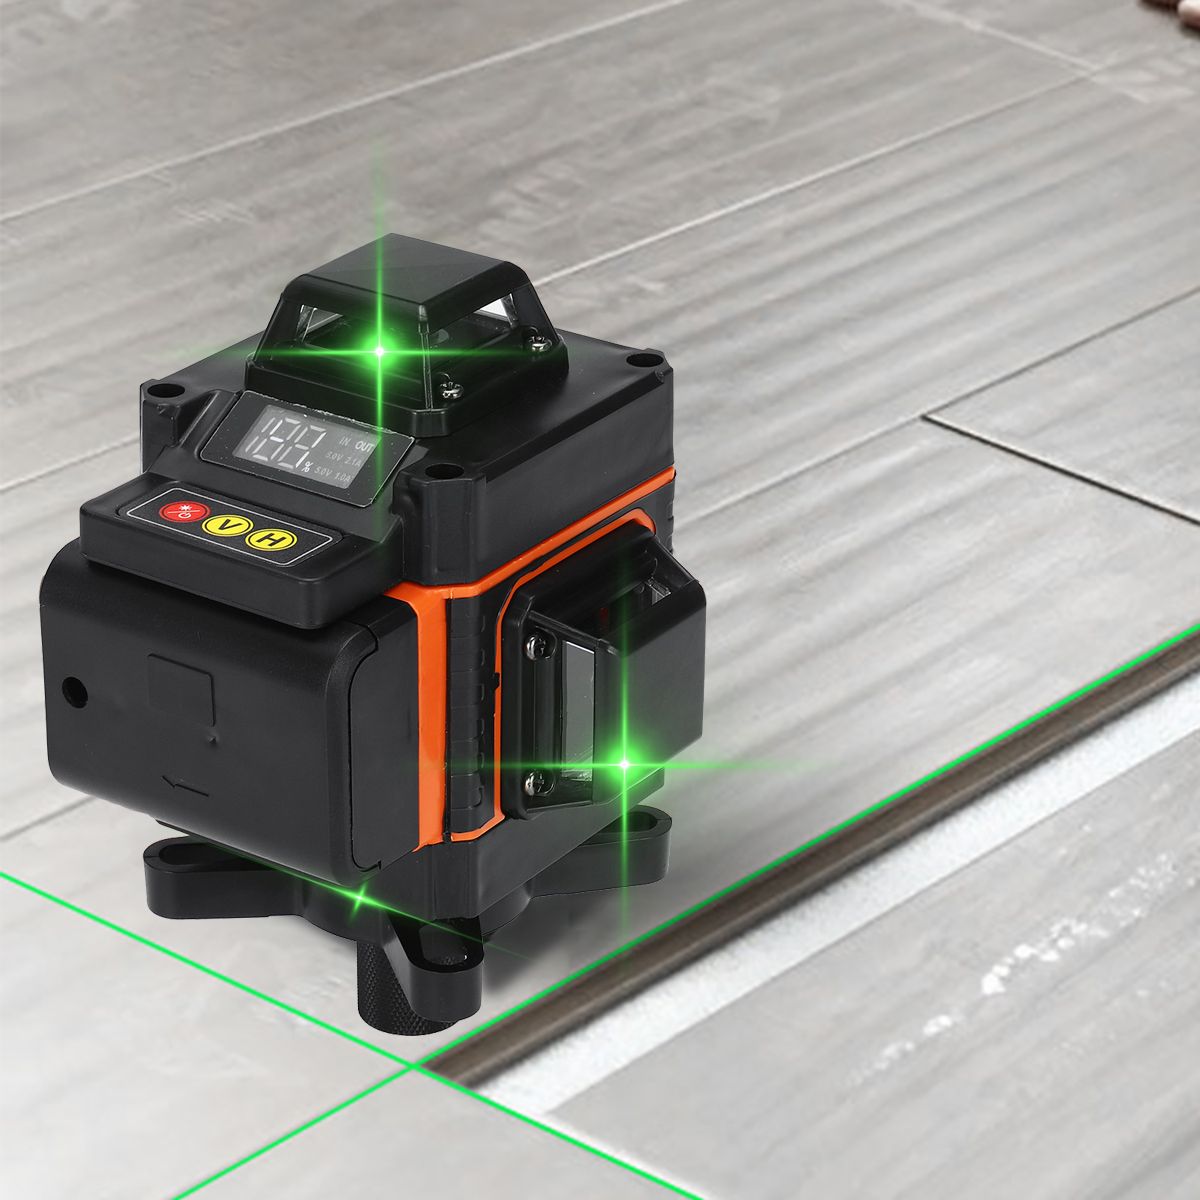 4D-16-Lines-Laser-Level-Green-Light-Auto-Self-Leveling-360deg-Rotary-Measure-Tool-1636661